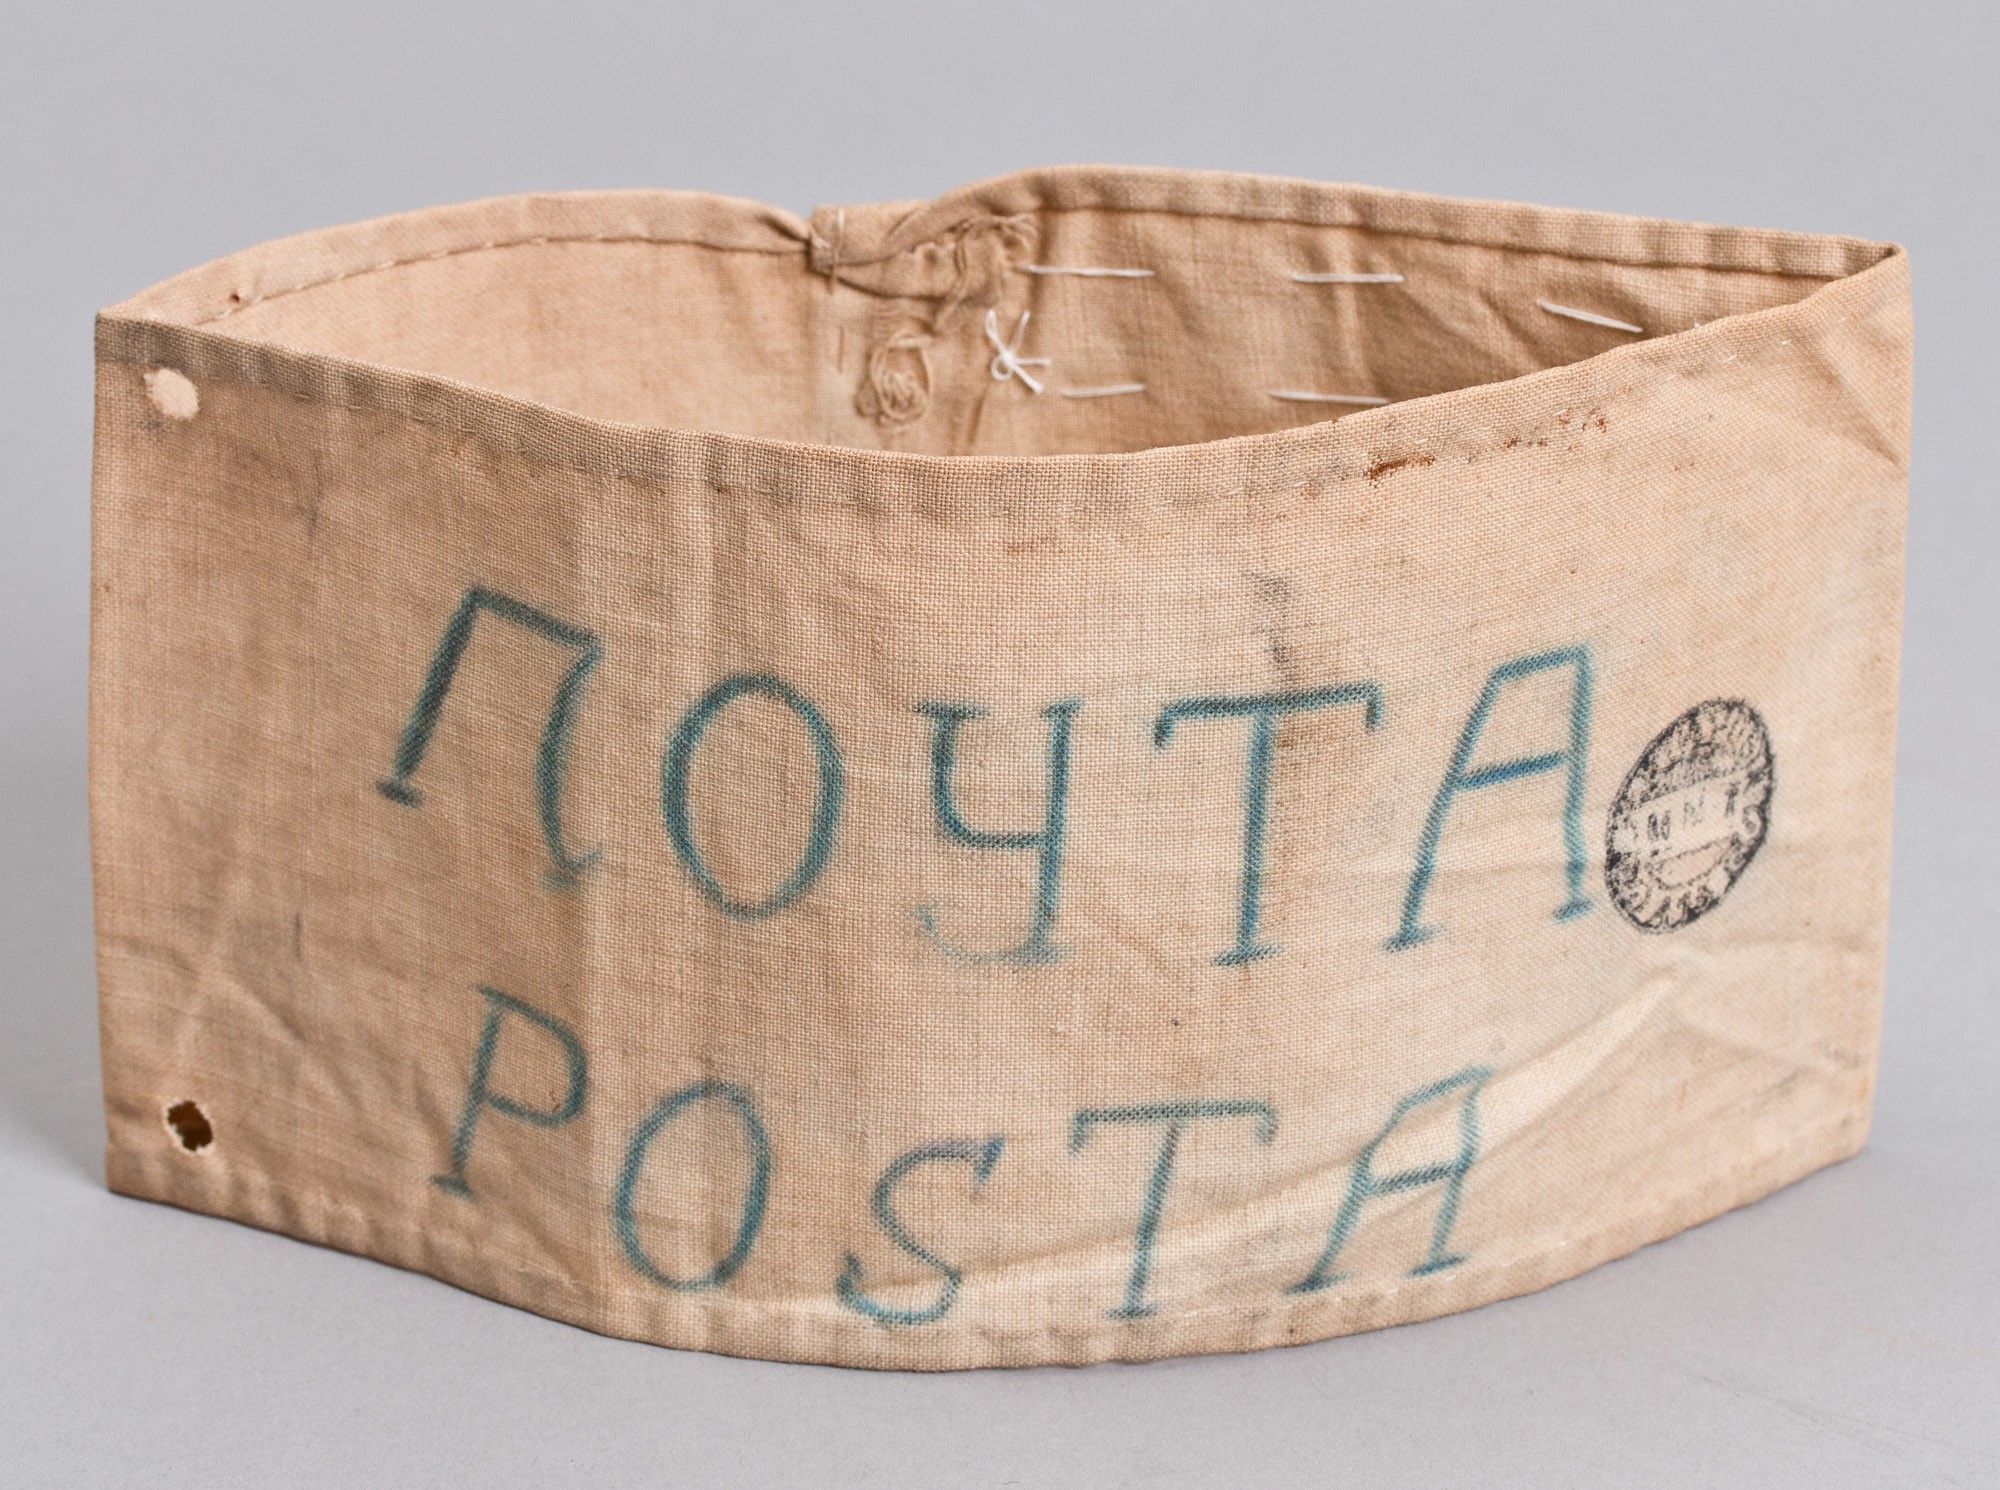 Postai karszalag „POSTA” cirillbetűs és latin betűs felirattal (Postamúzeum CC BY-NC-SA)